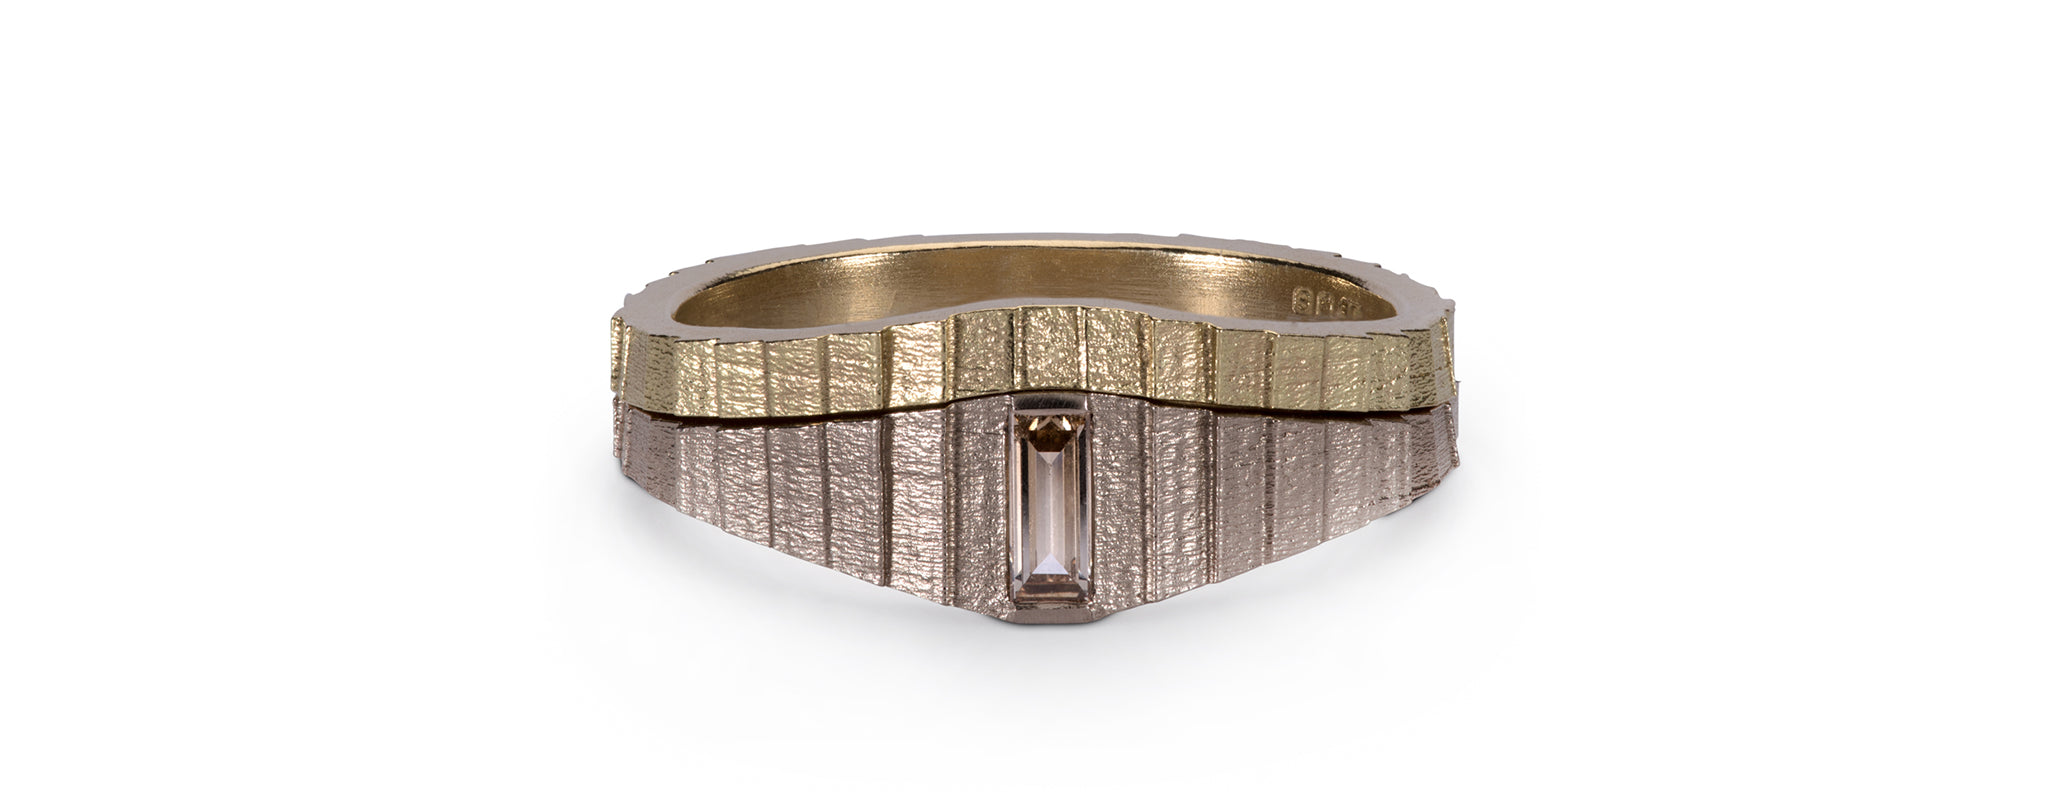 Tapered square band wedding ring set